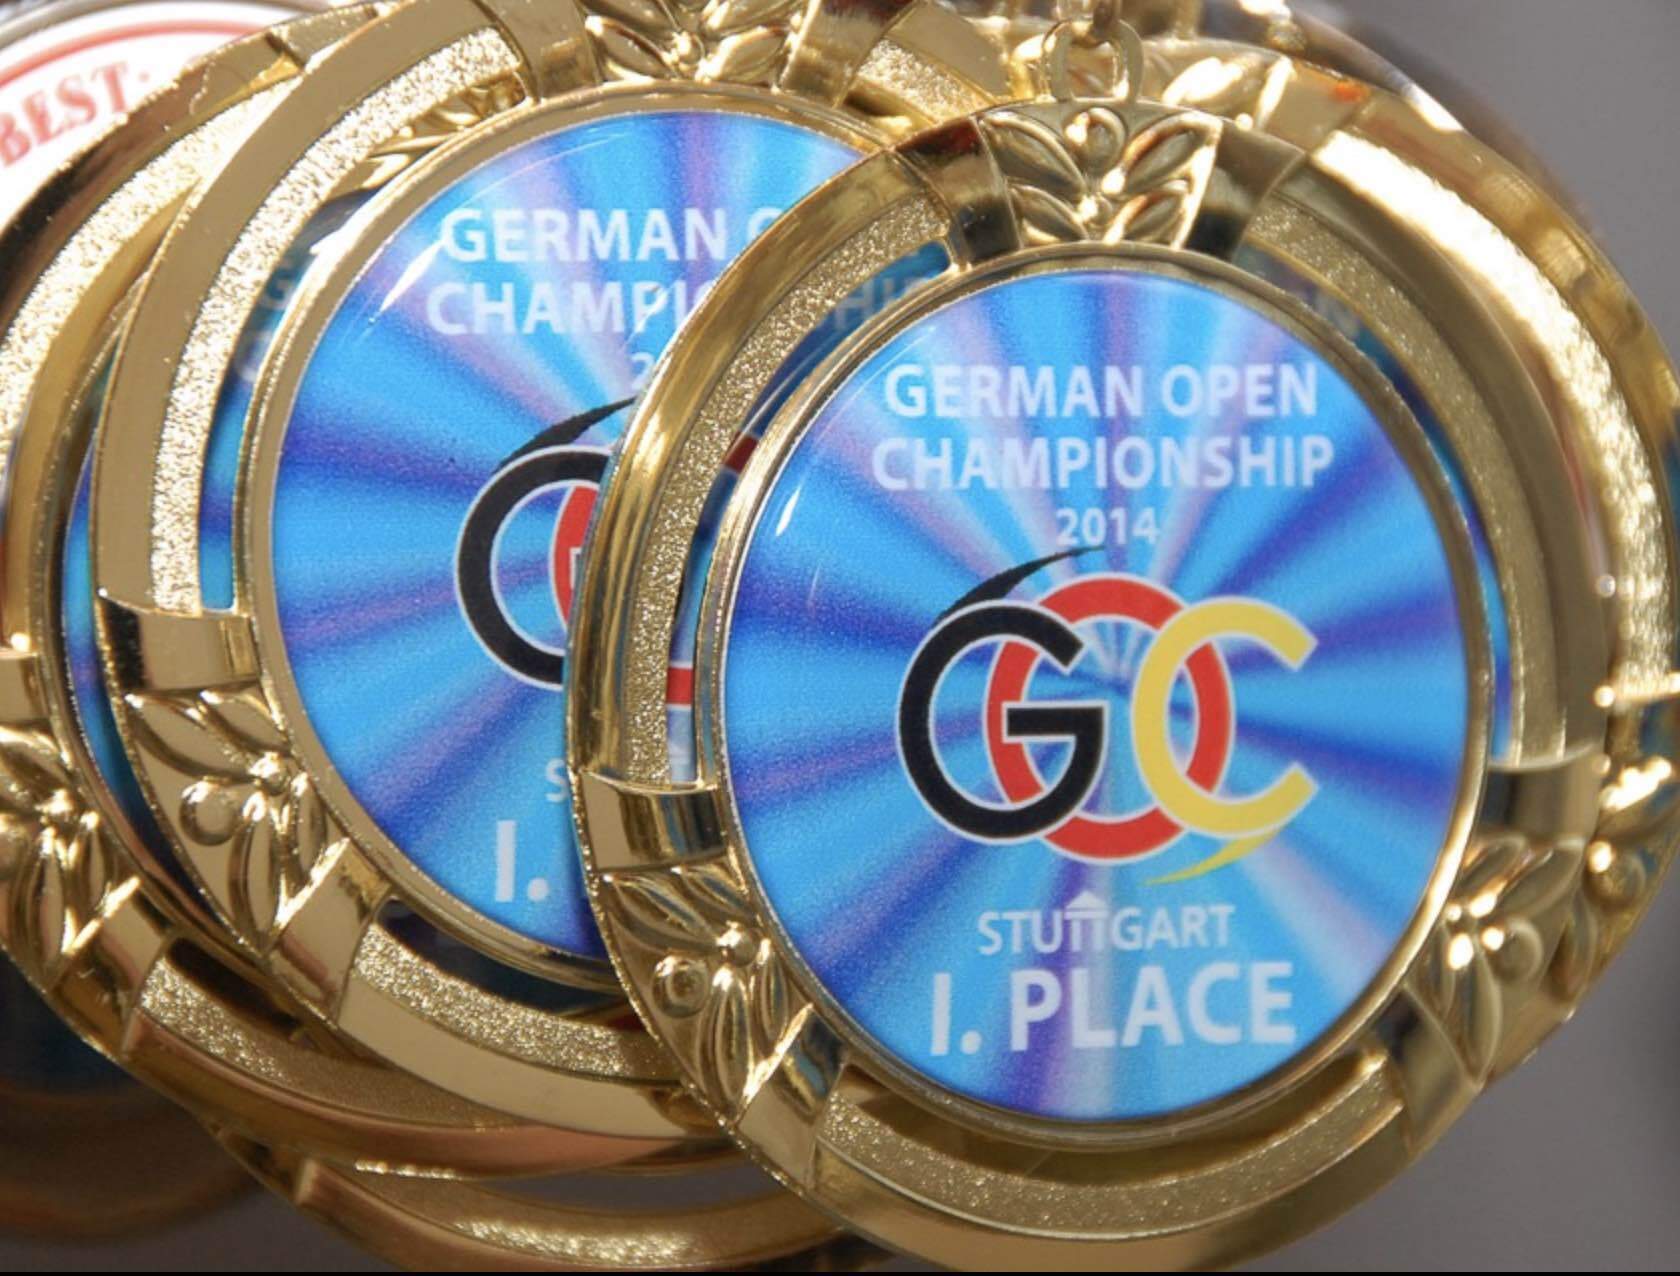 German Open Championship